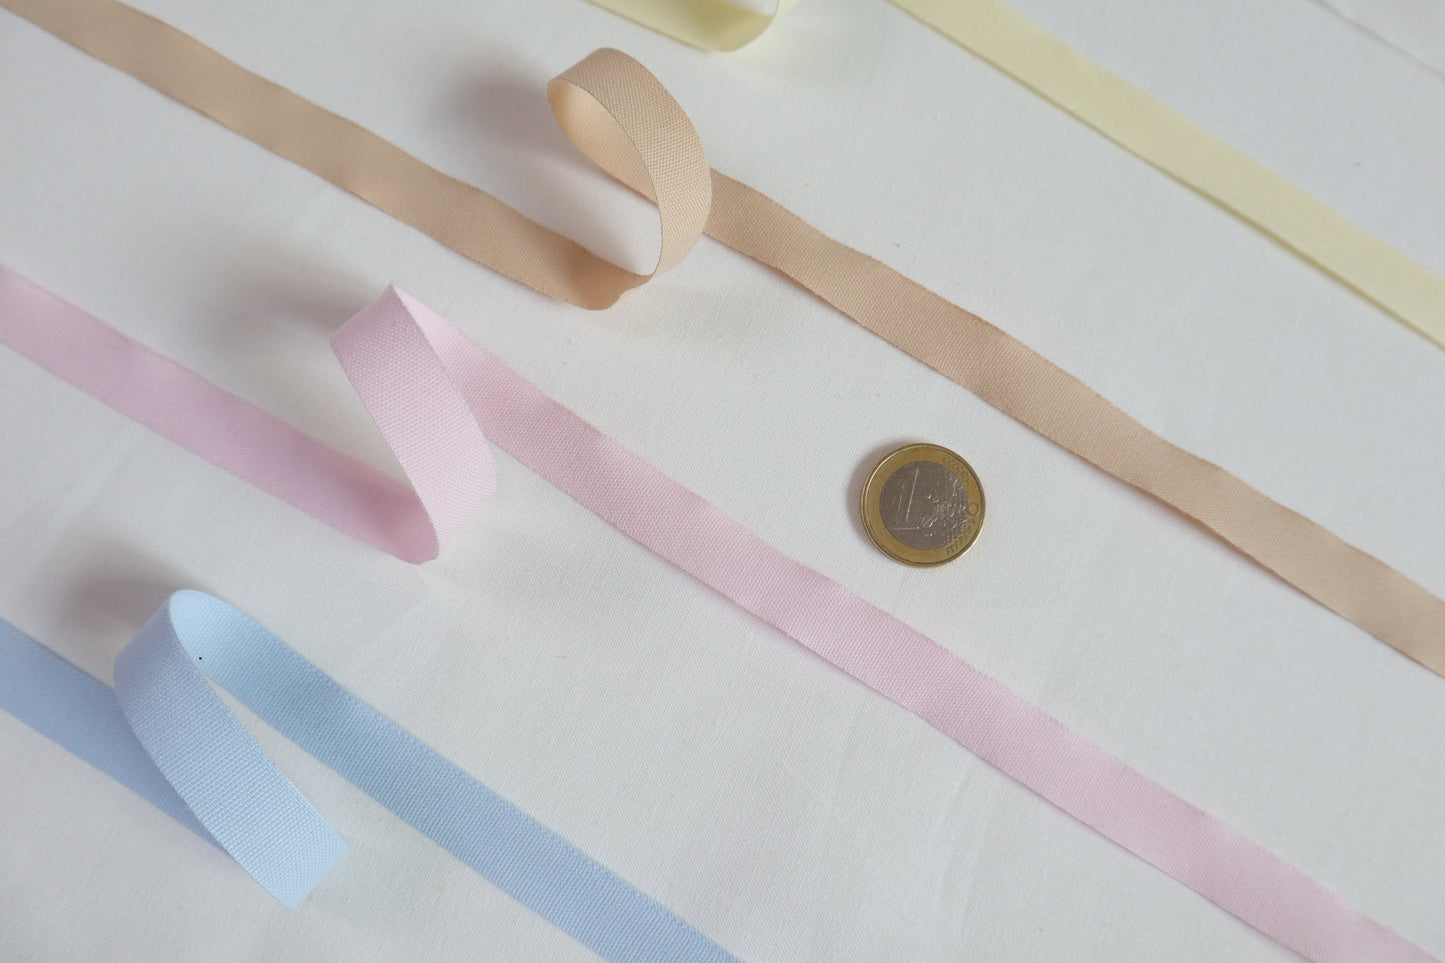 Soft organic cotton ribbon / tape in 12mm